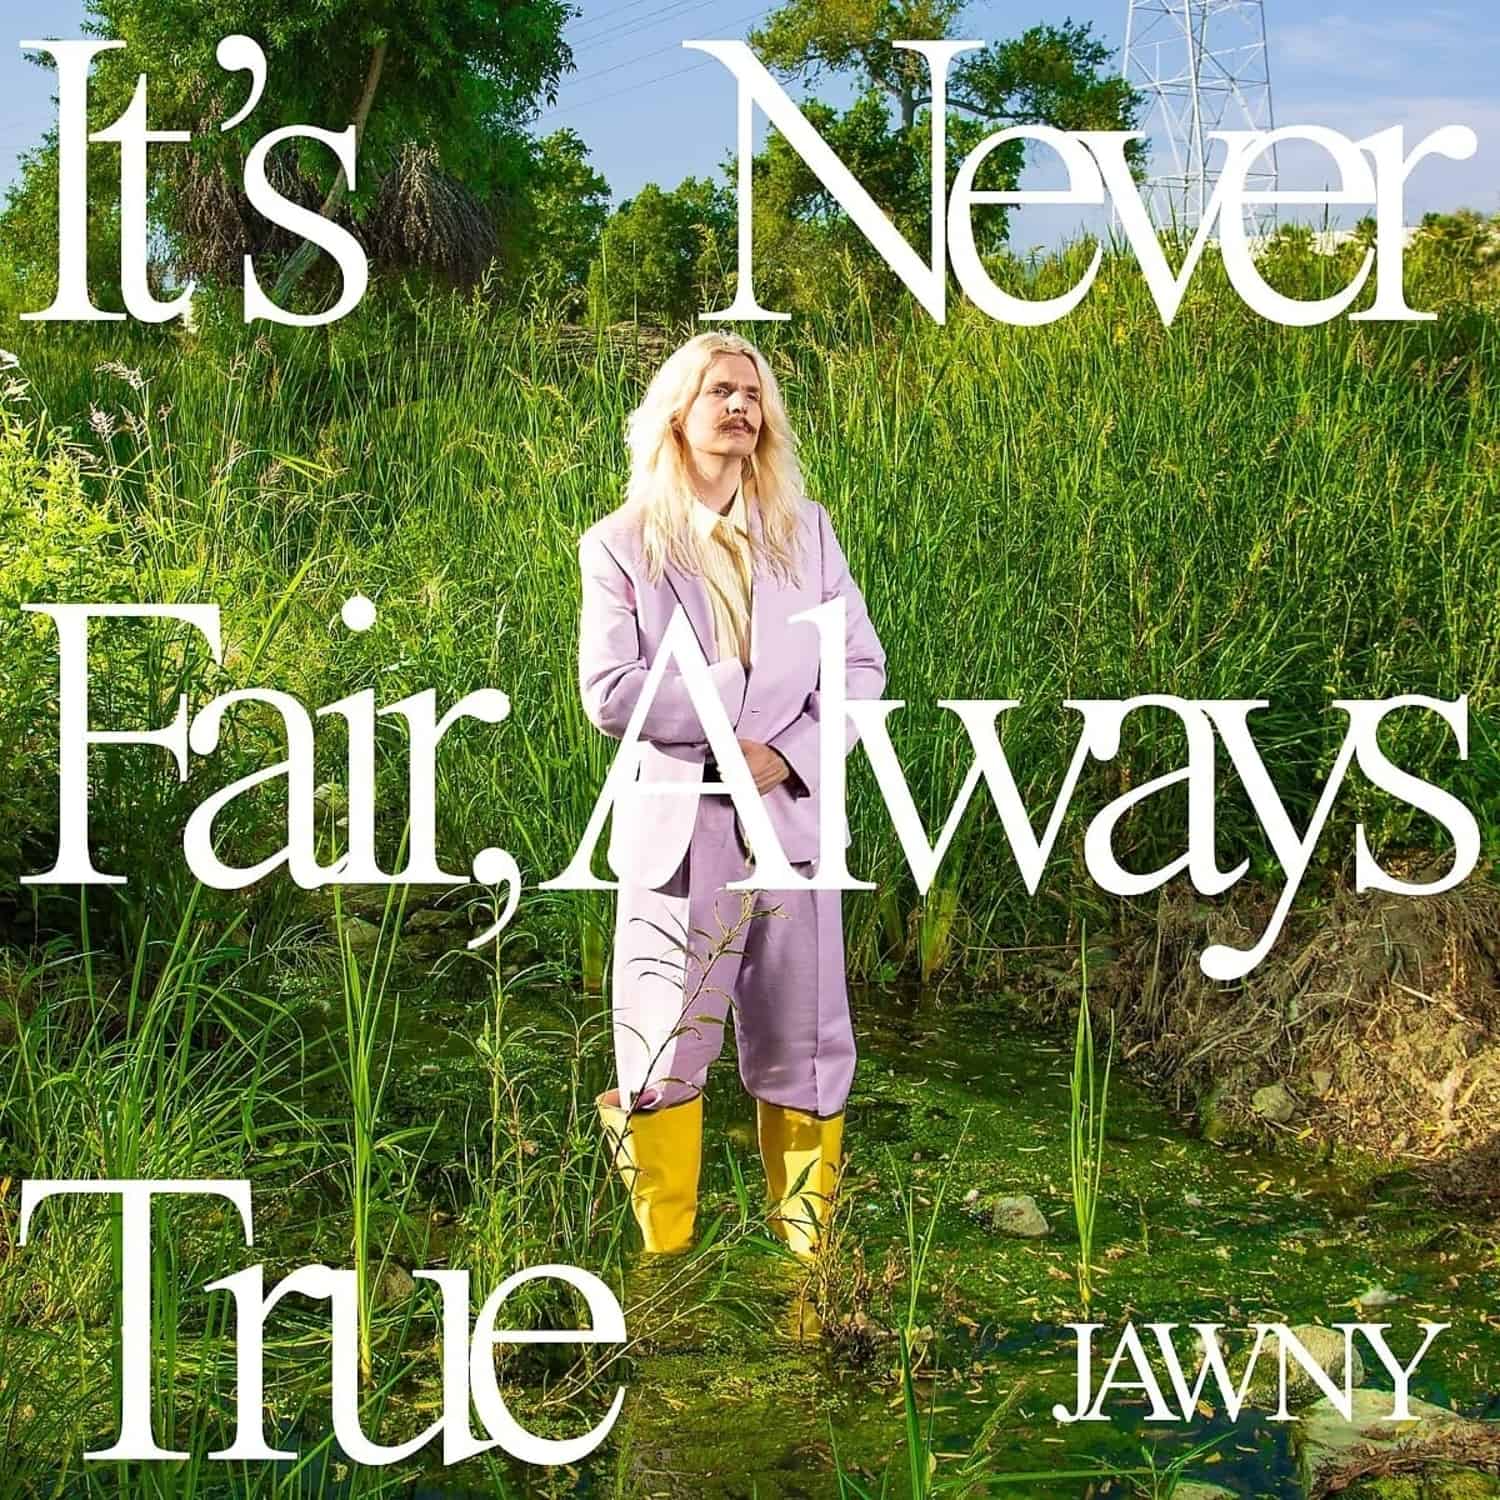 Jawny - IT S NEVER FAIR, ALWAYS TRUE 